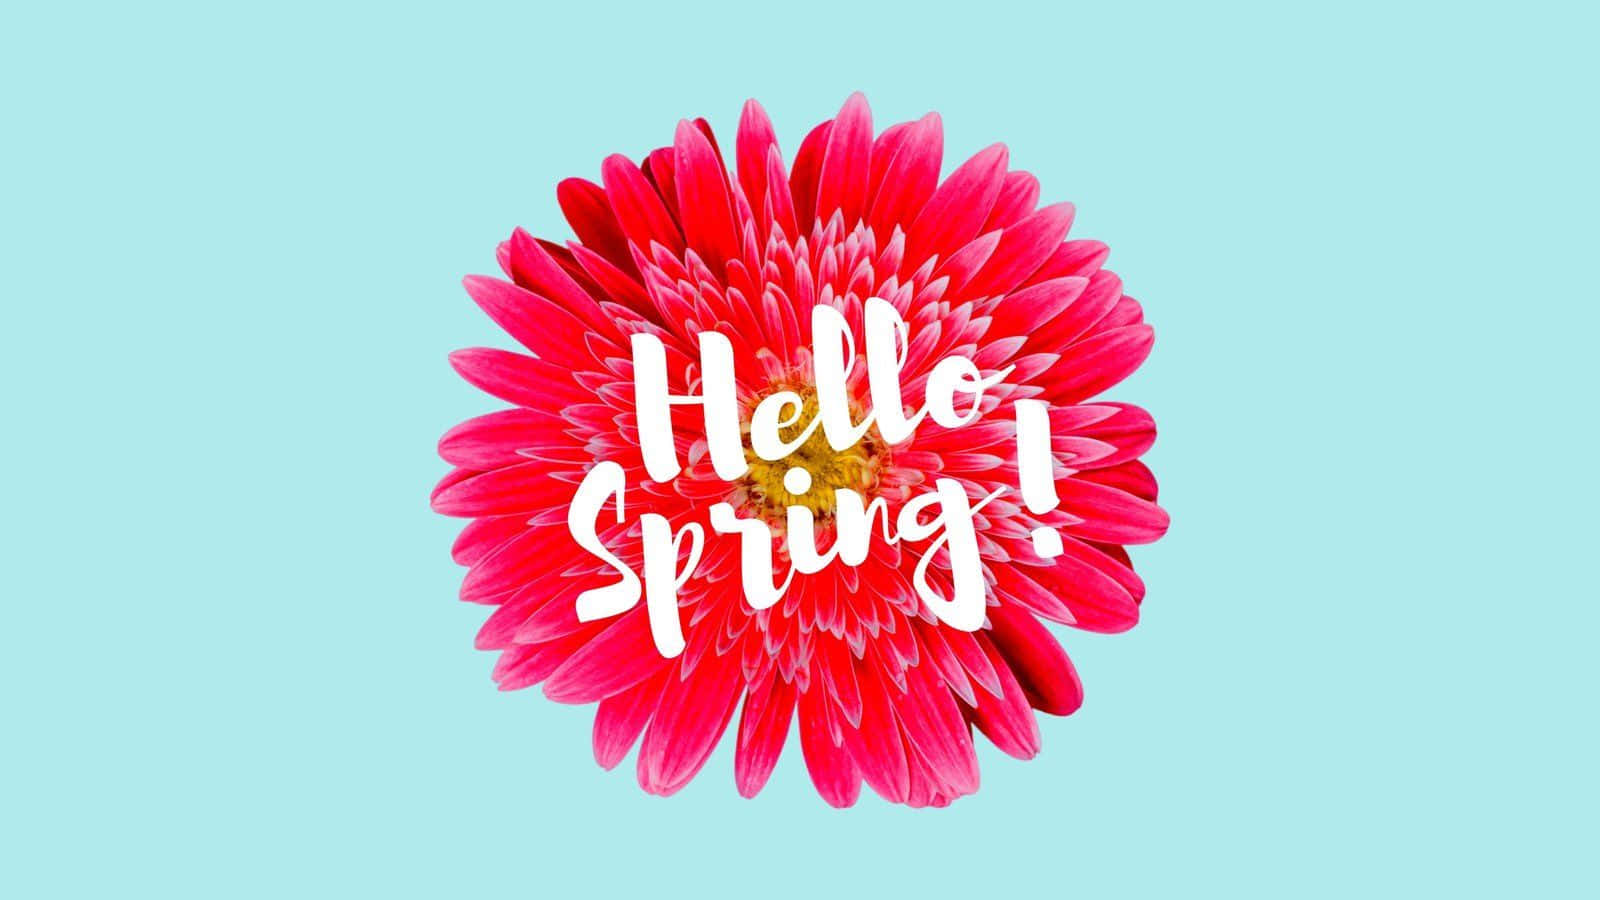 Blooming Spring Pastel Scenery Wallpaper